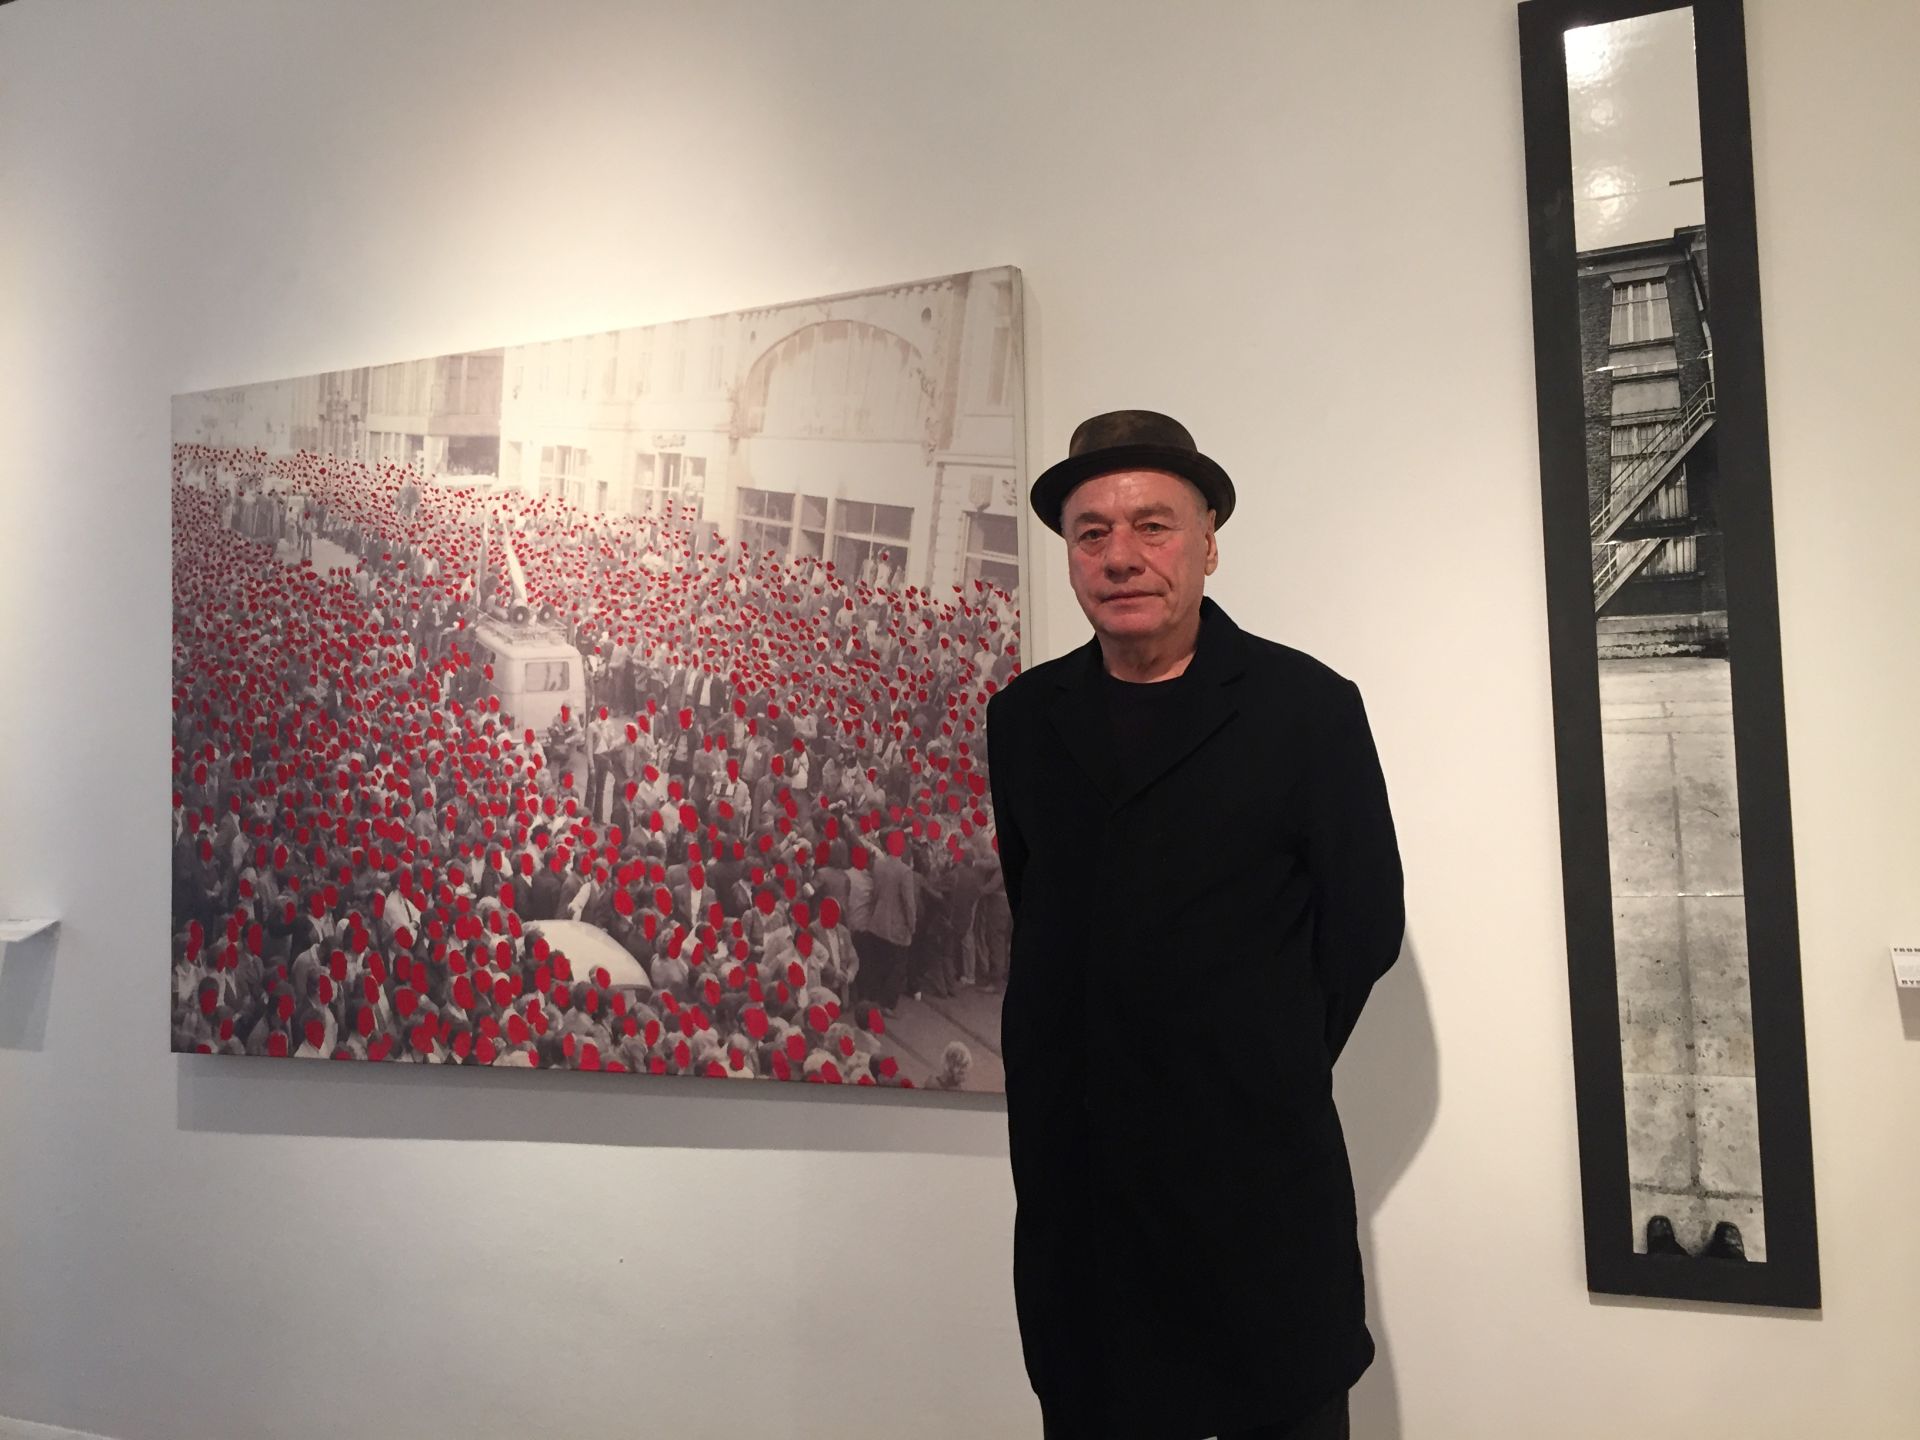 The photograph shows Ryszard Waśko, aKONZEPT Gallery, Berlin, 09.2020, photo from Andrzej Paruzel’s archives